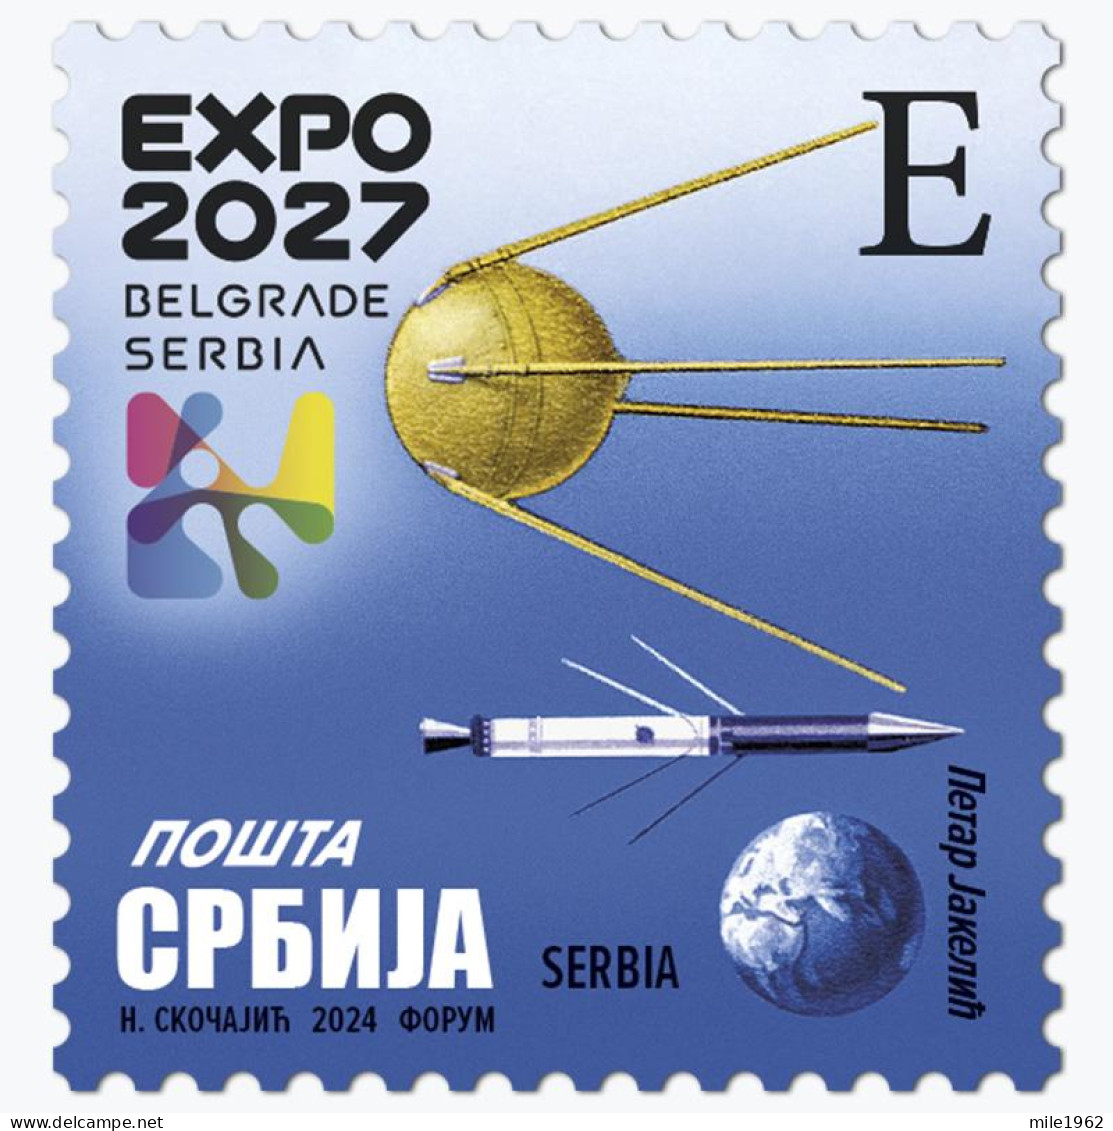 SERBIA 2024 - EXPO 2027, Definitive Stamp E - Serbia